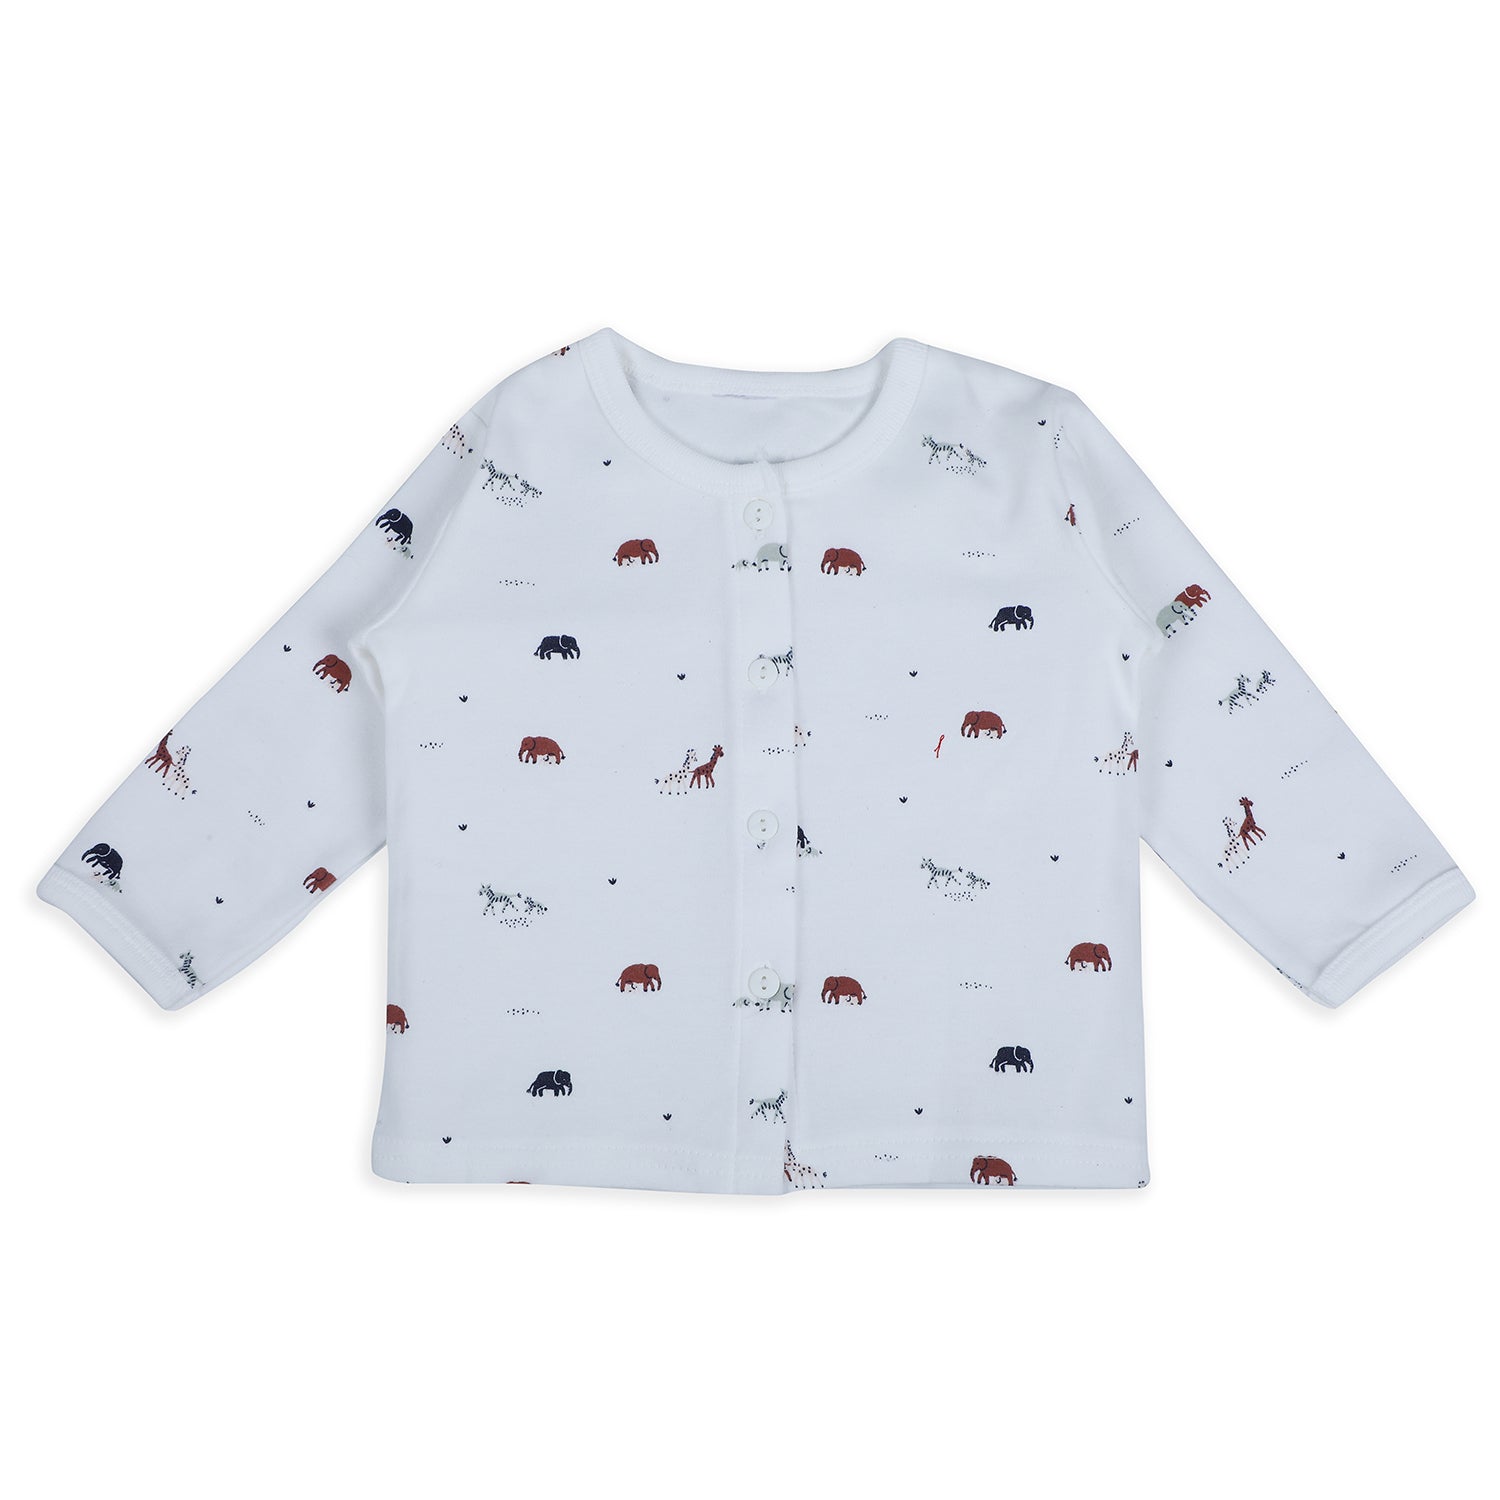 Baby Moo Animal Sleepy Time Cotton Full Sleeves Top And Pyjama 2pcs Night Suit - White